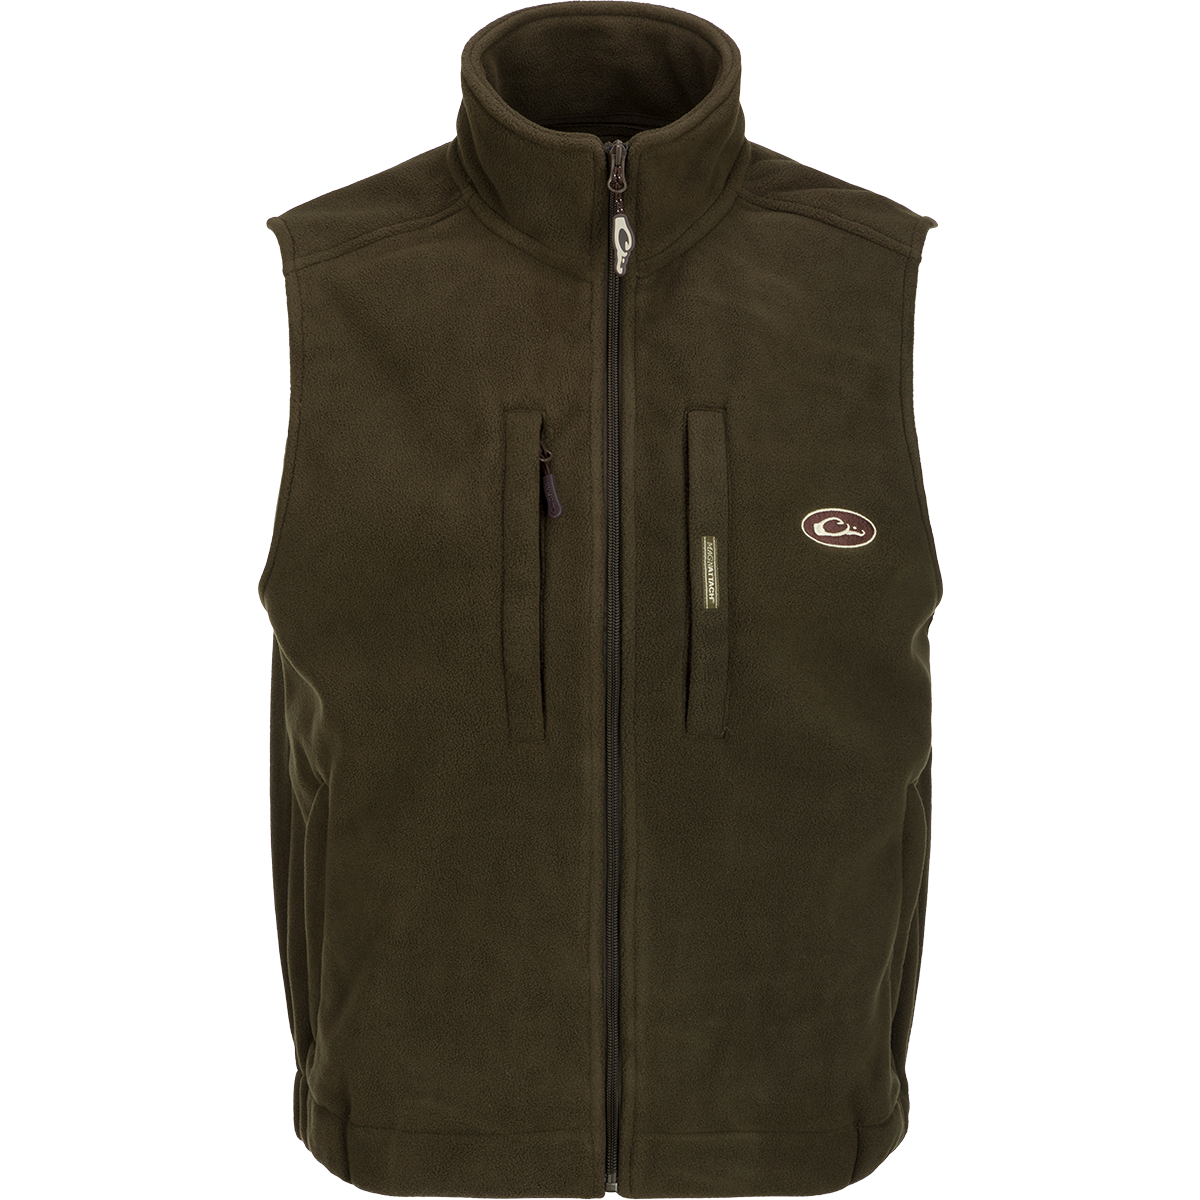 Image of MST Solid Windproof Layering Vest <br /> Reg $99.99